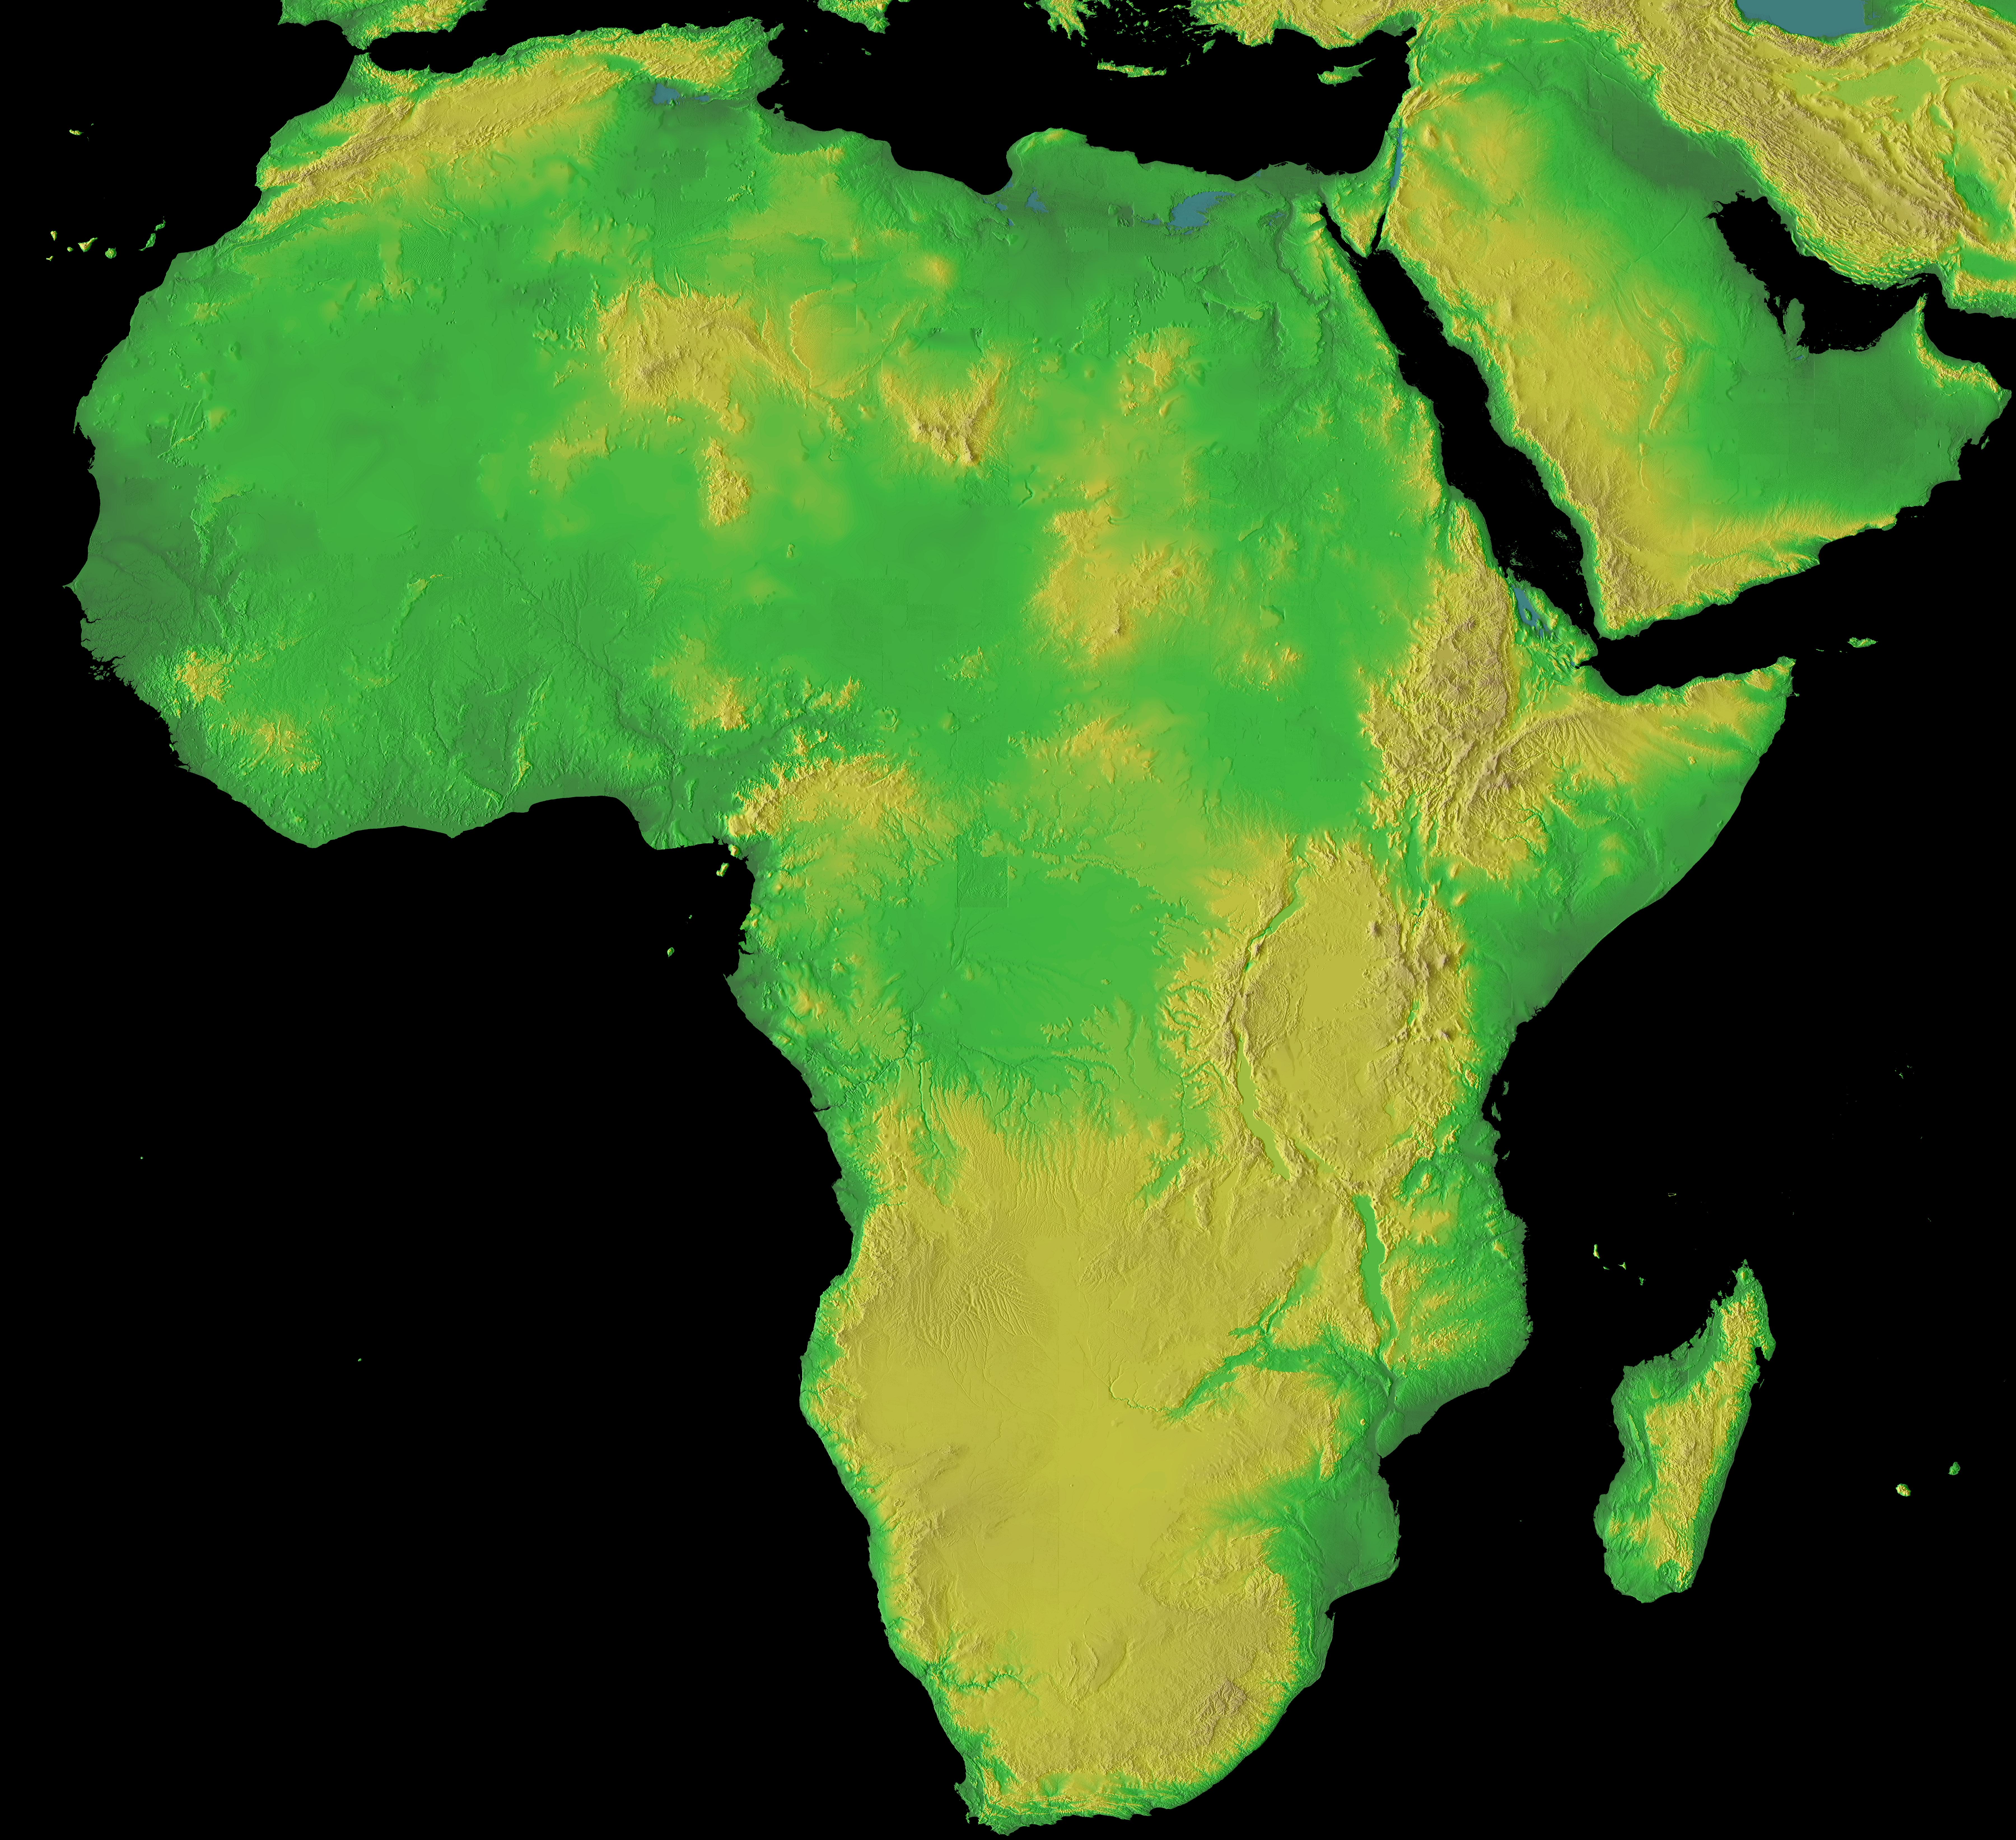 Mapa Físico de África